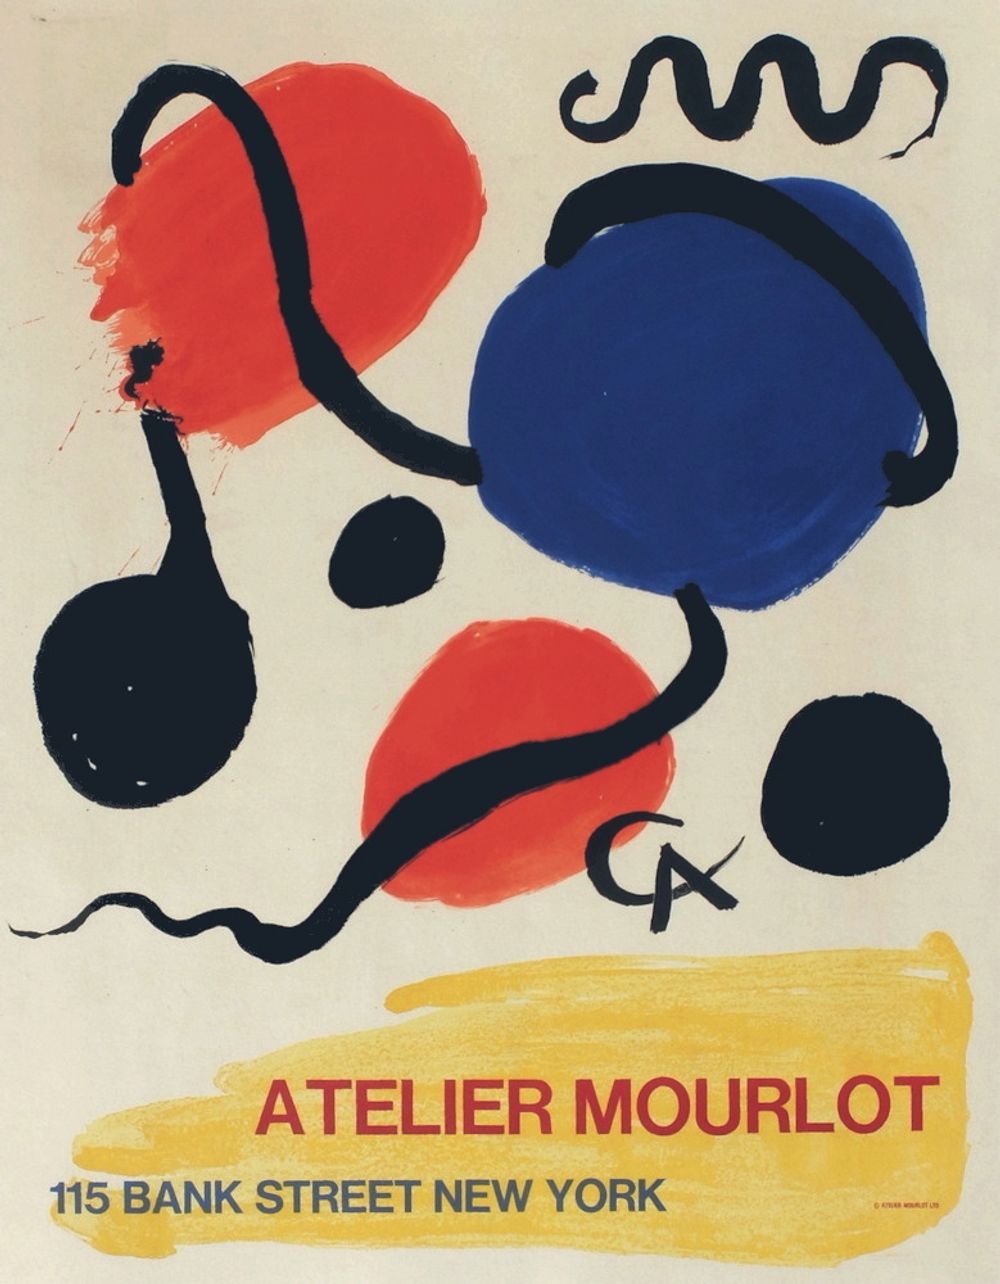 Expo 66 - Atelier Mourlot New York